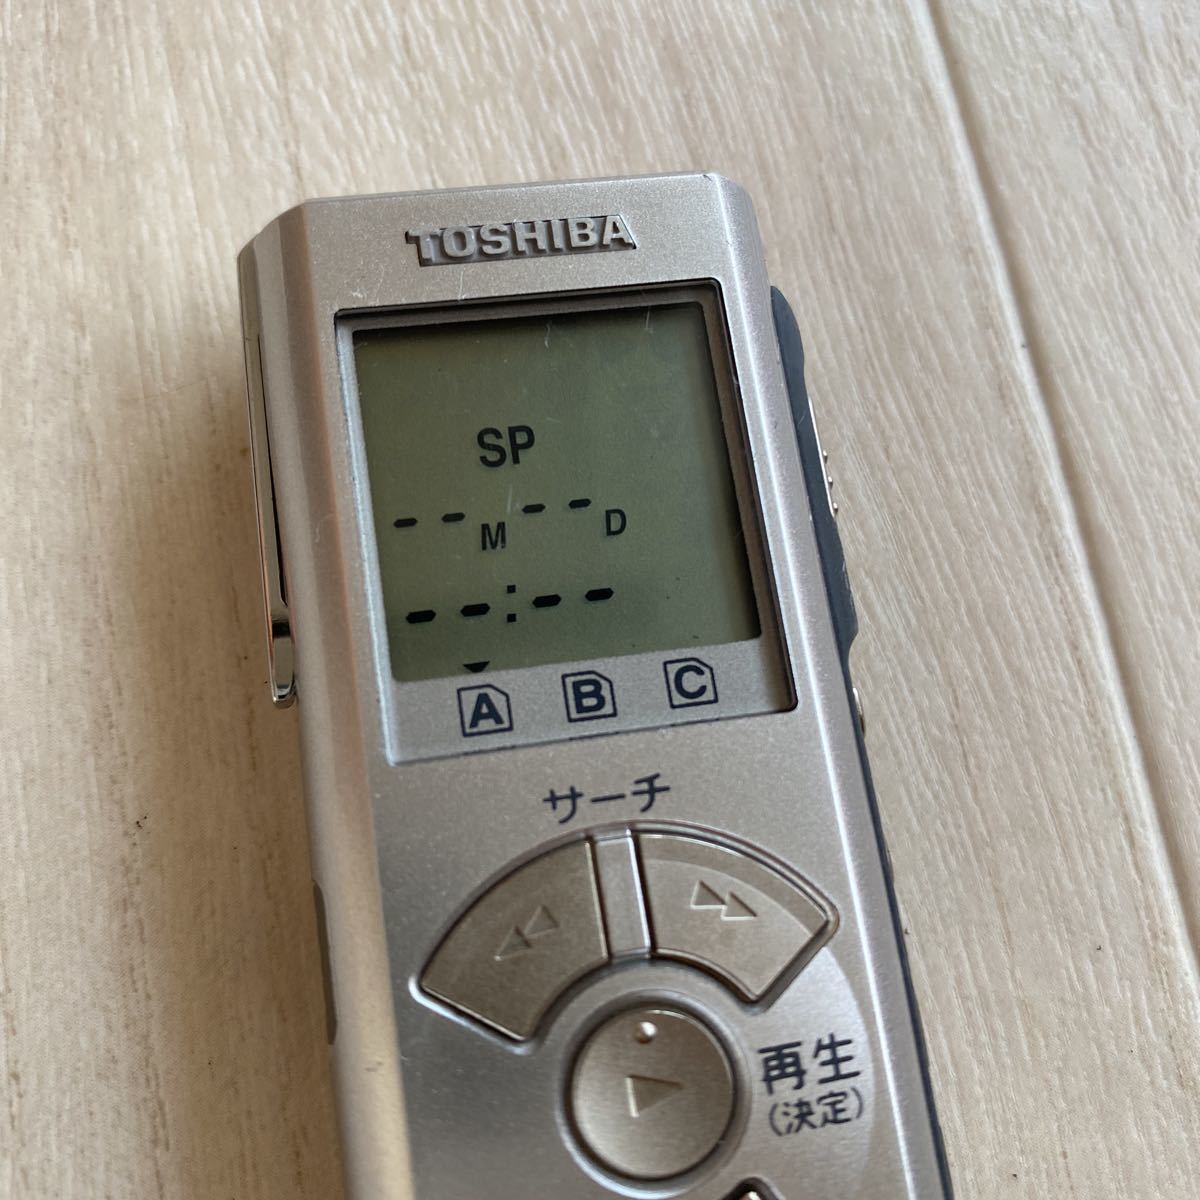 TOSHIBA VOICE BAR DMR-900S 東芝 ICレコーダー ボイスレコーダー 送料無料 S676